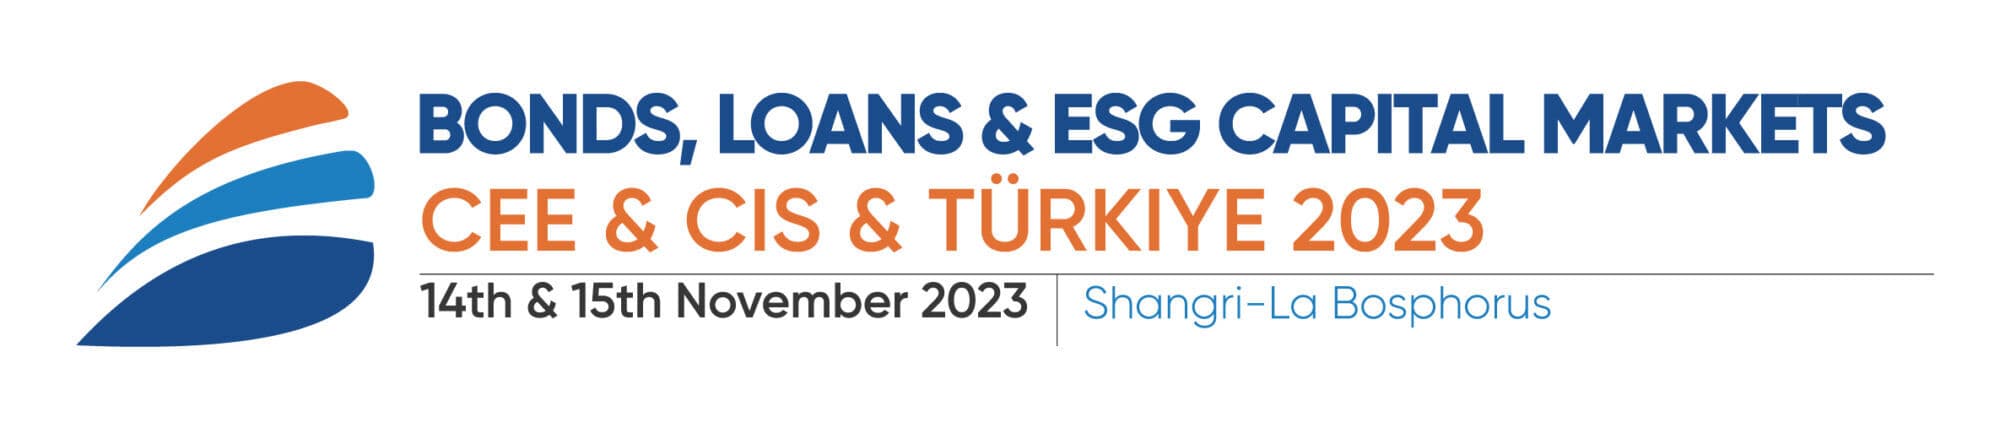 Bonds, Loans & ESG Capital Markets CEE, CIS & Türkiye 2023